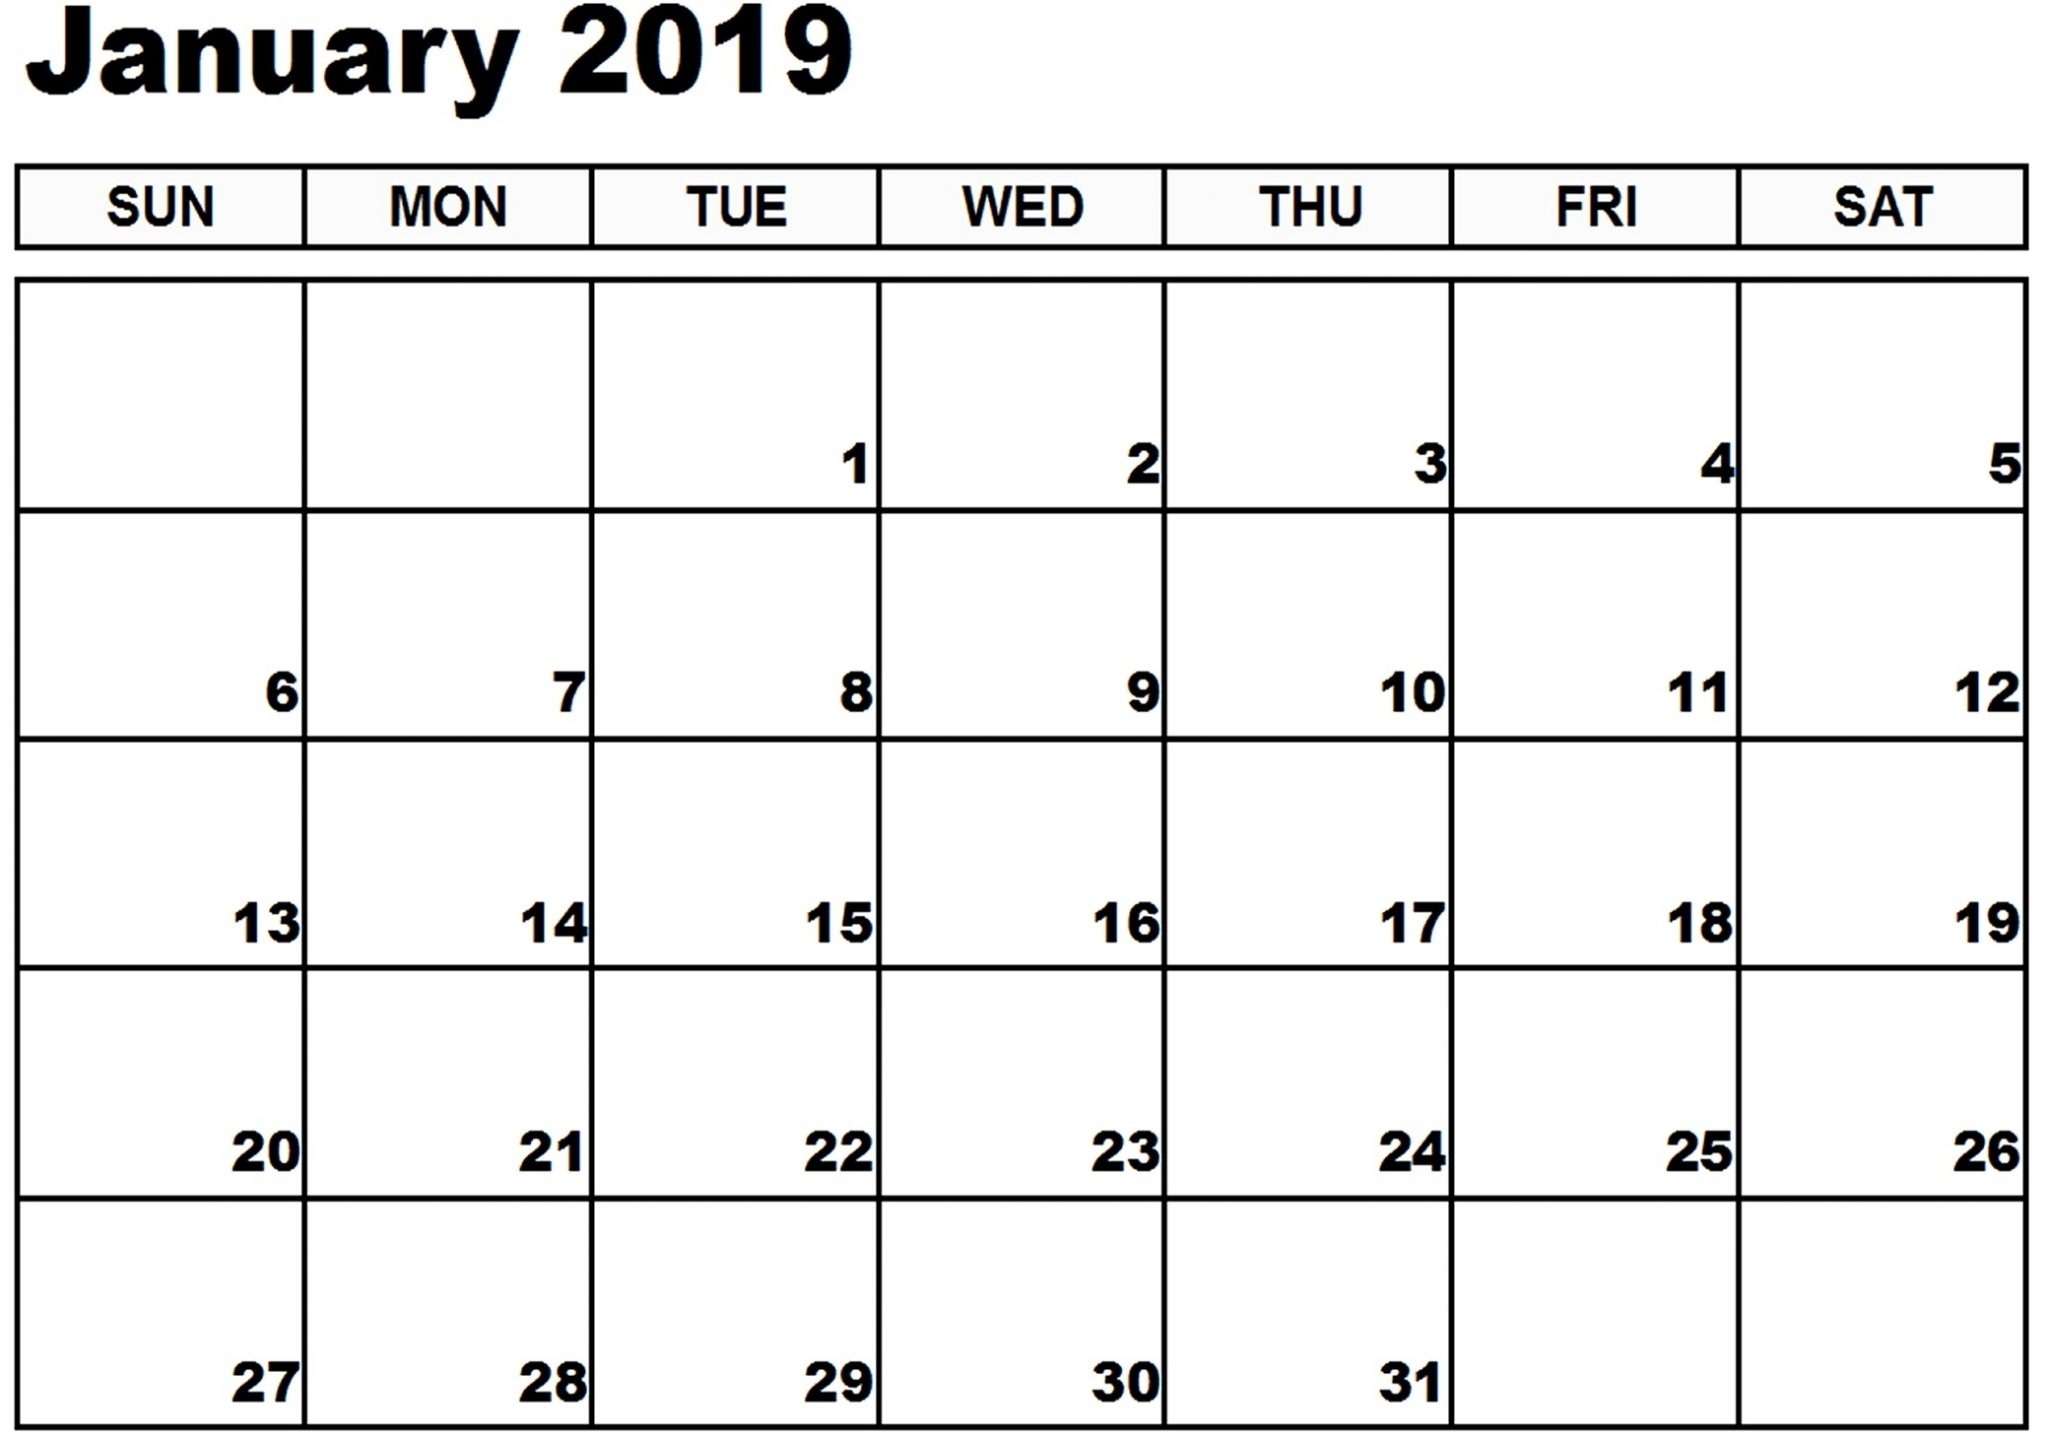 January 2019 Calendar – Holidays Printable Template | Calendar Template Free Calendar With Holidays